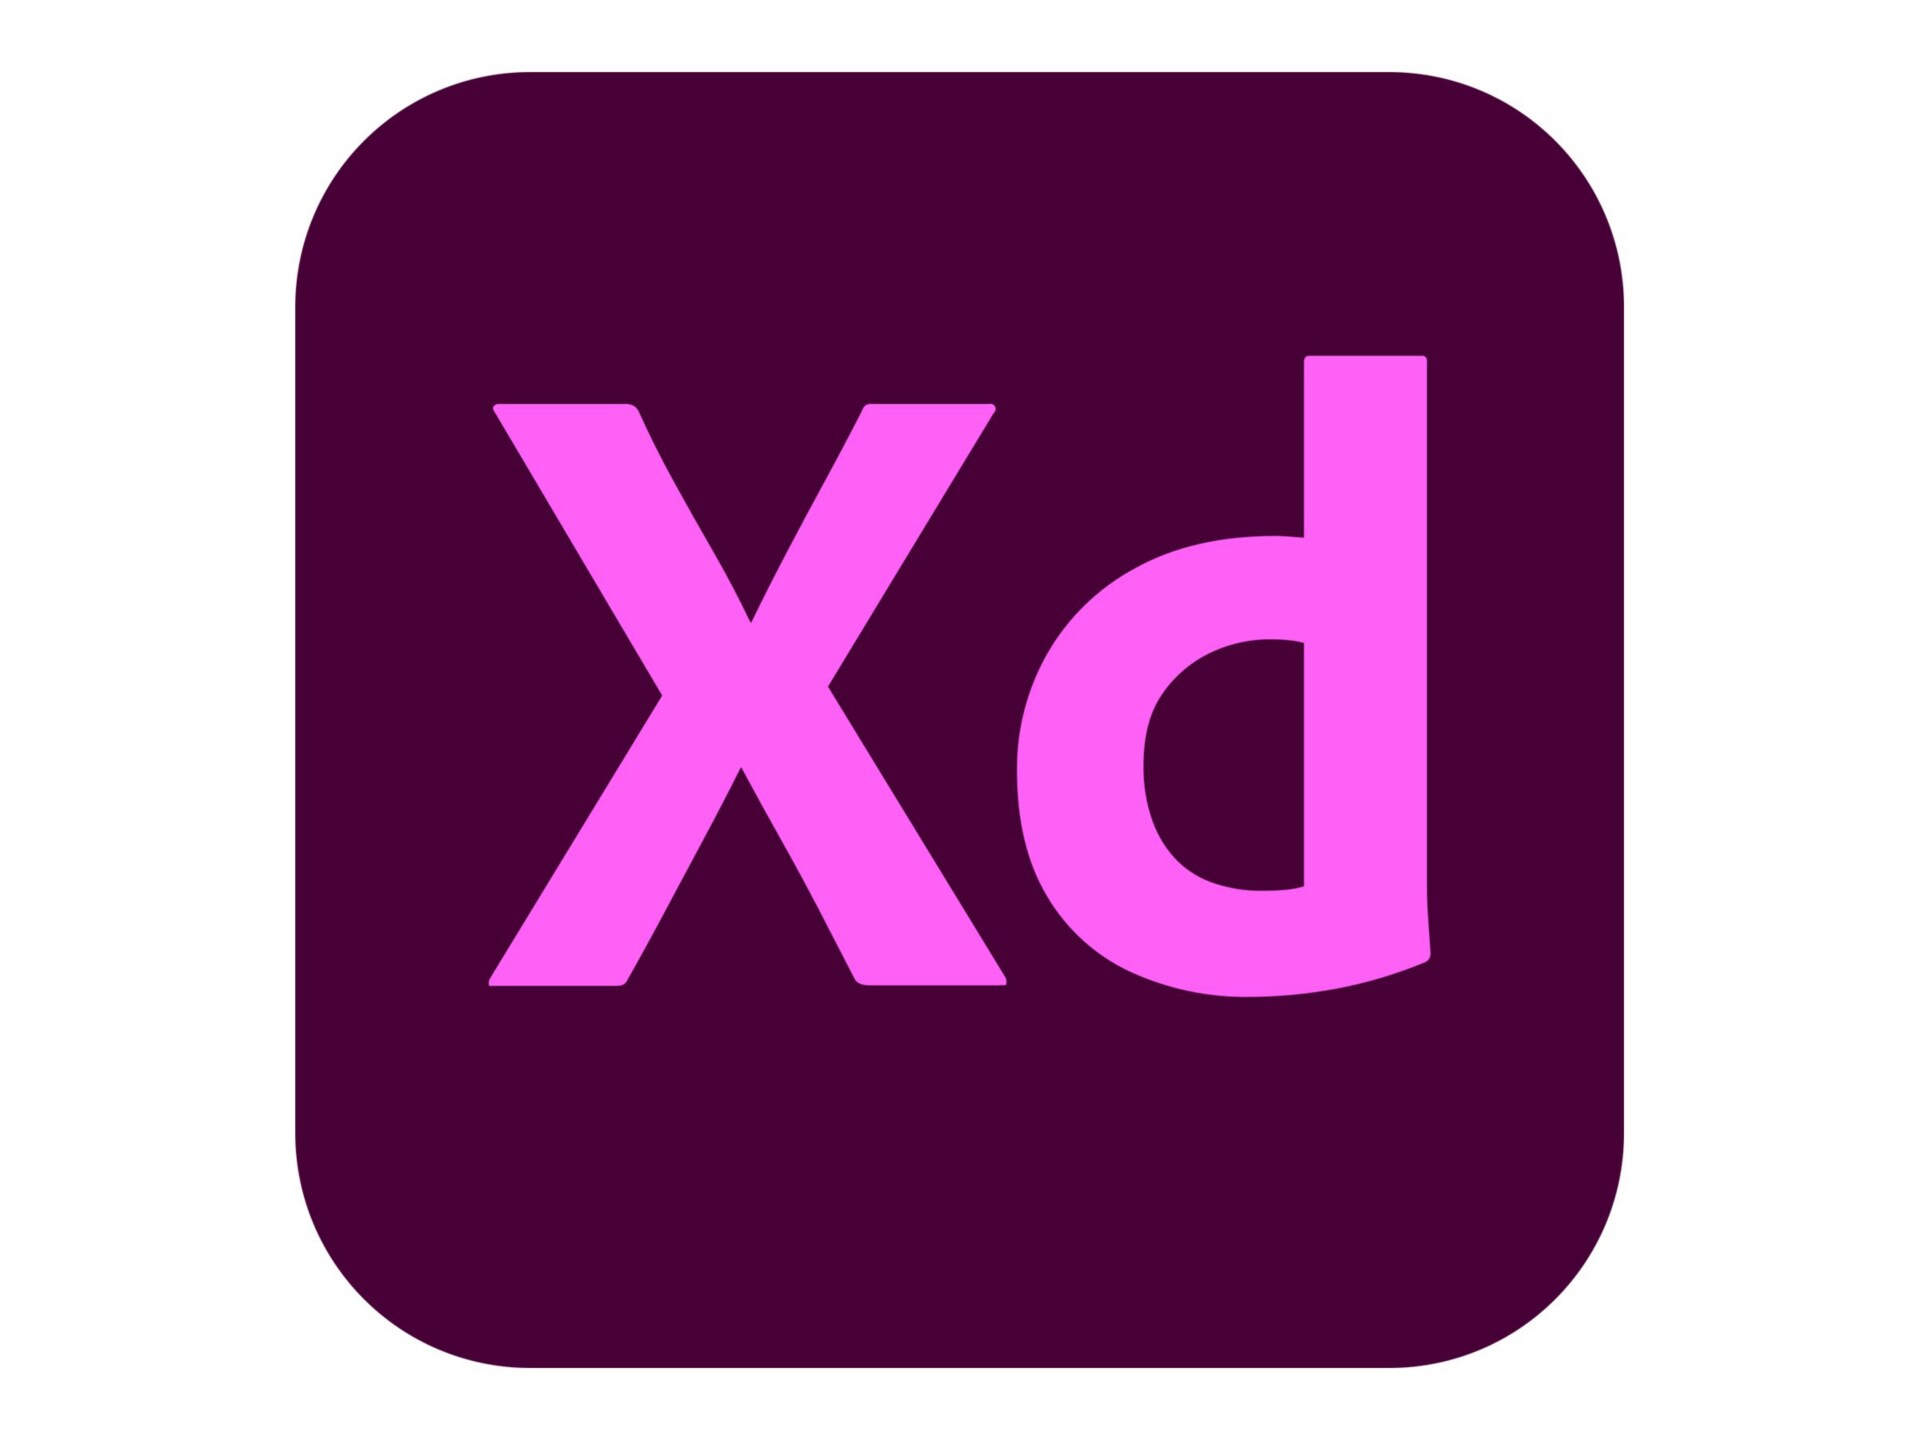 Adobe XD CC for Enterprise - Subscription New (31 months) - 1 named user